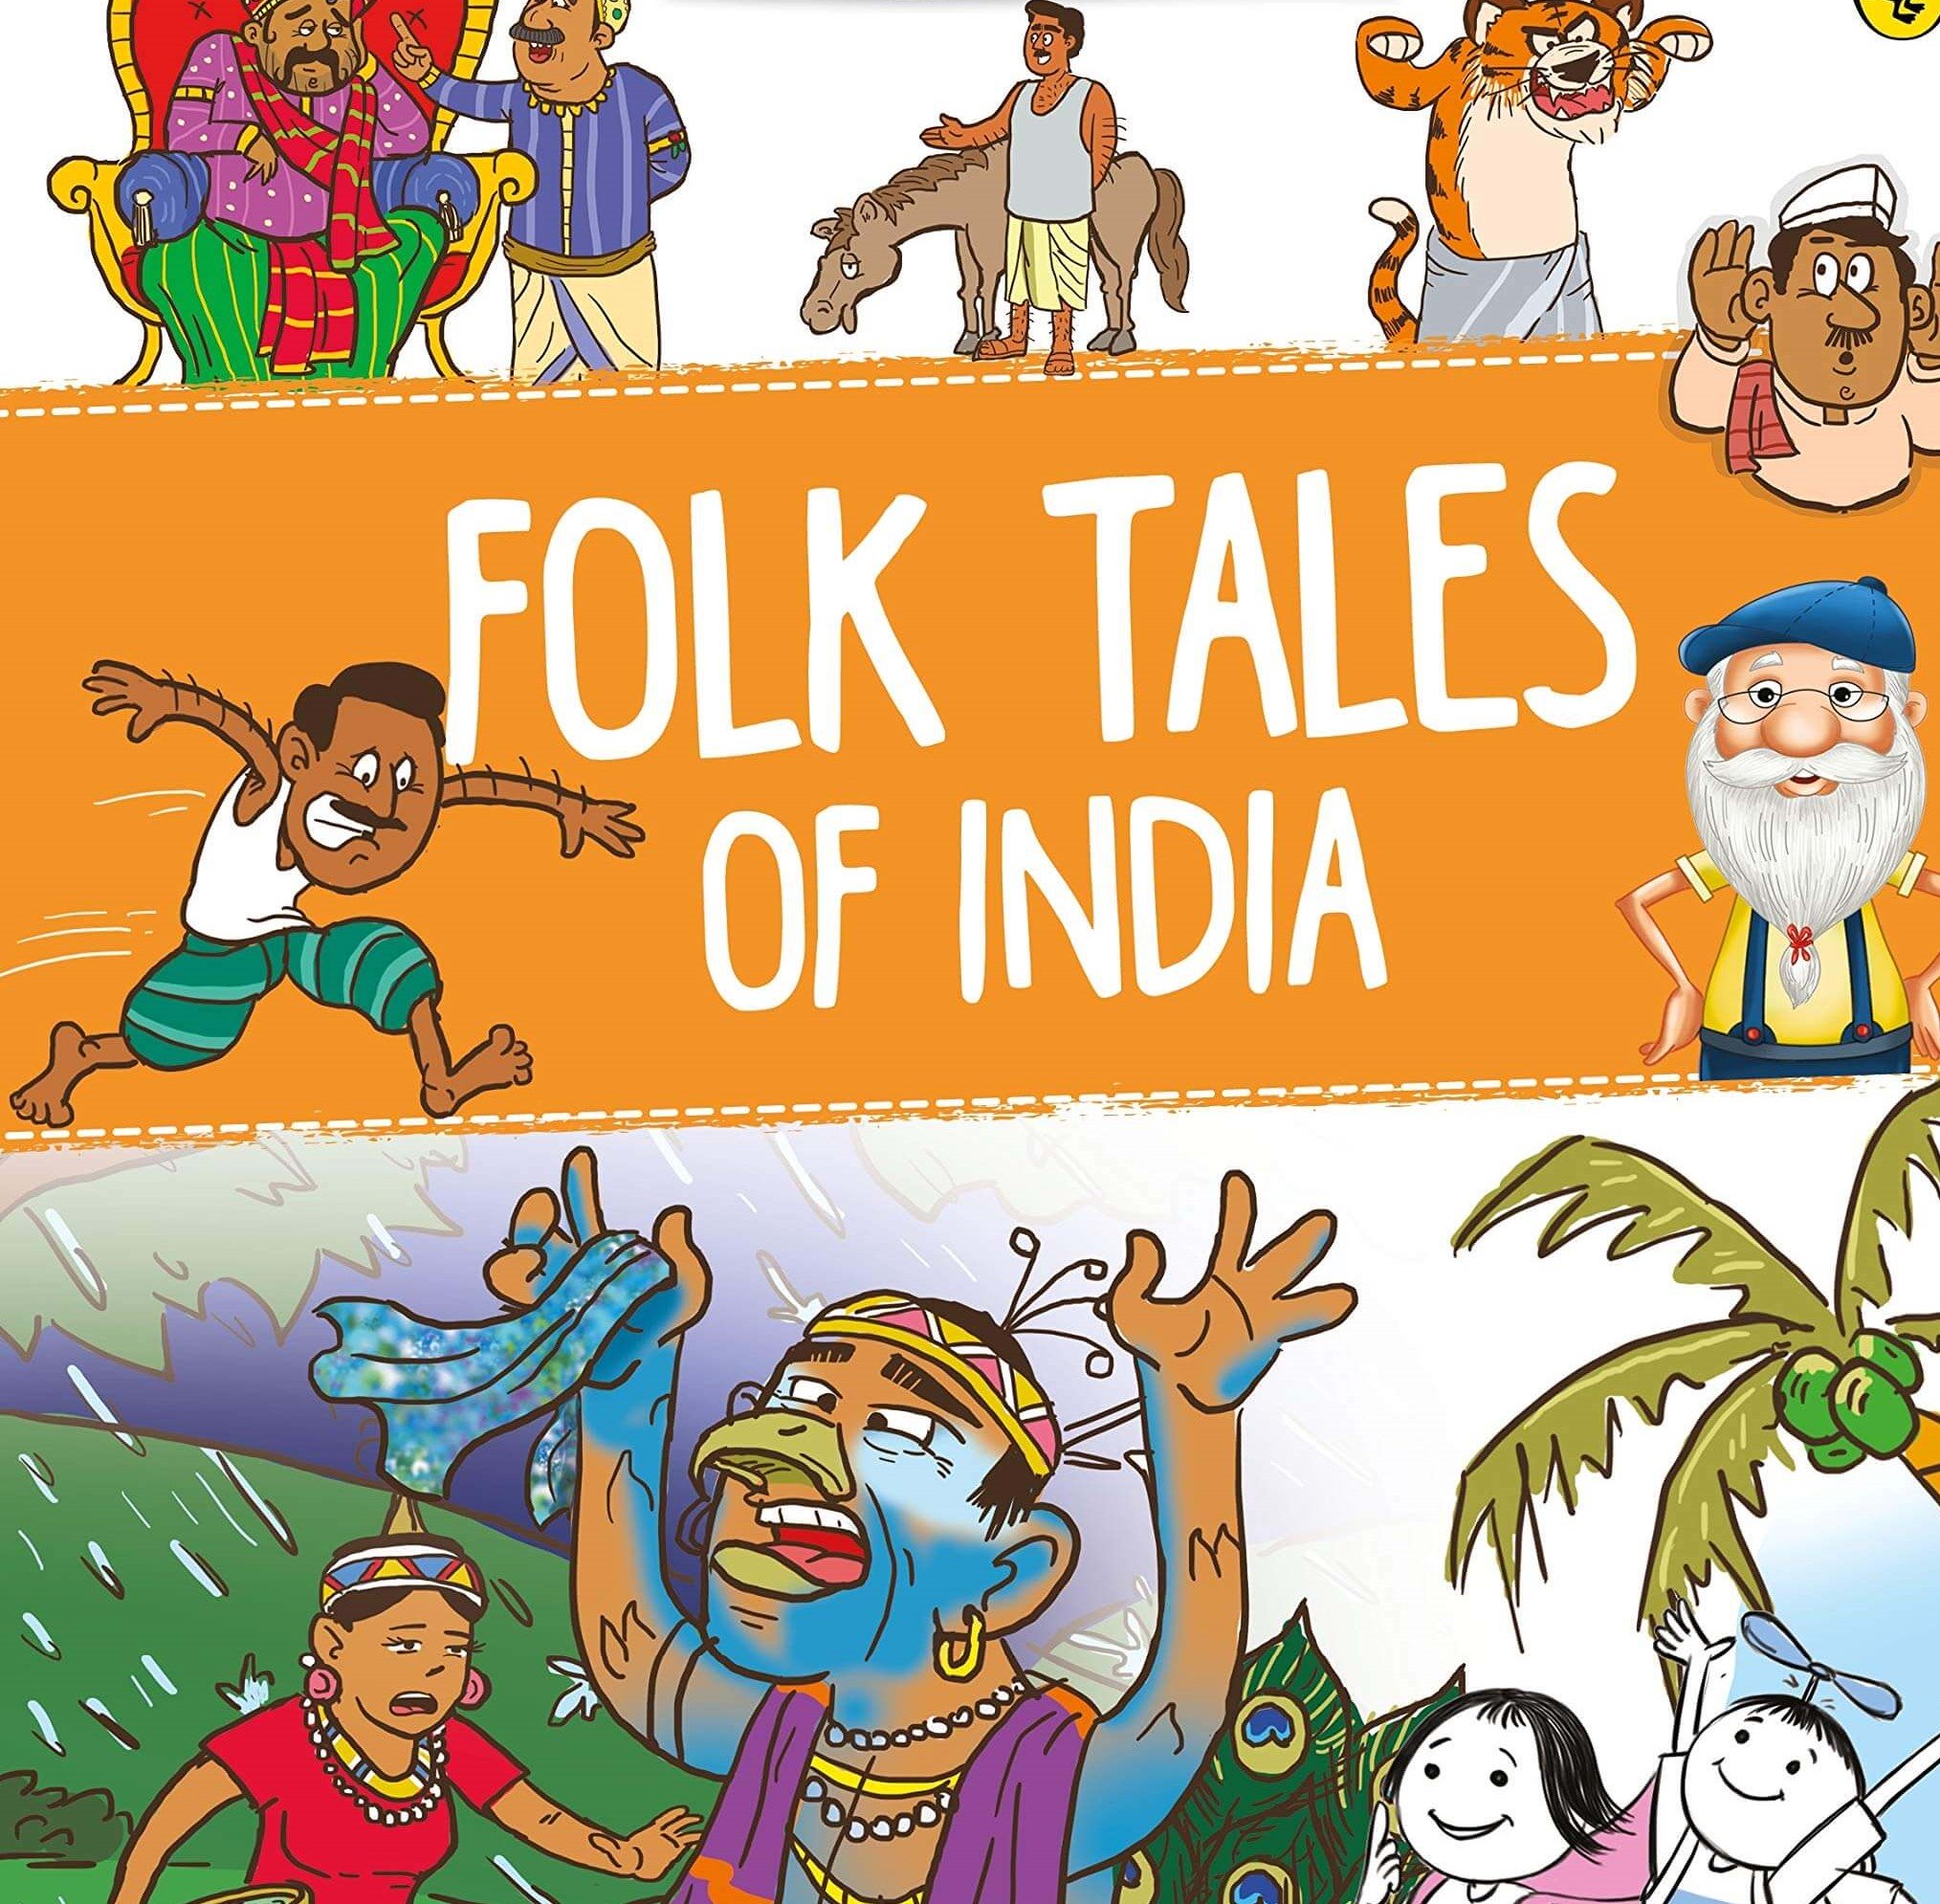 Indian Folktales